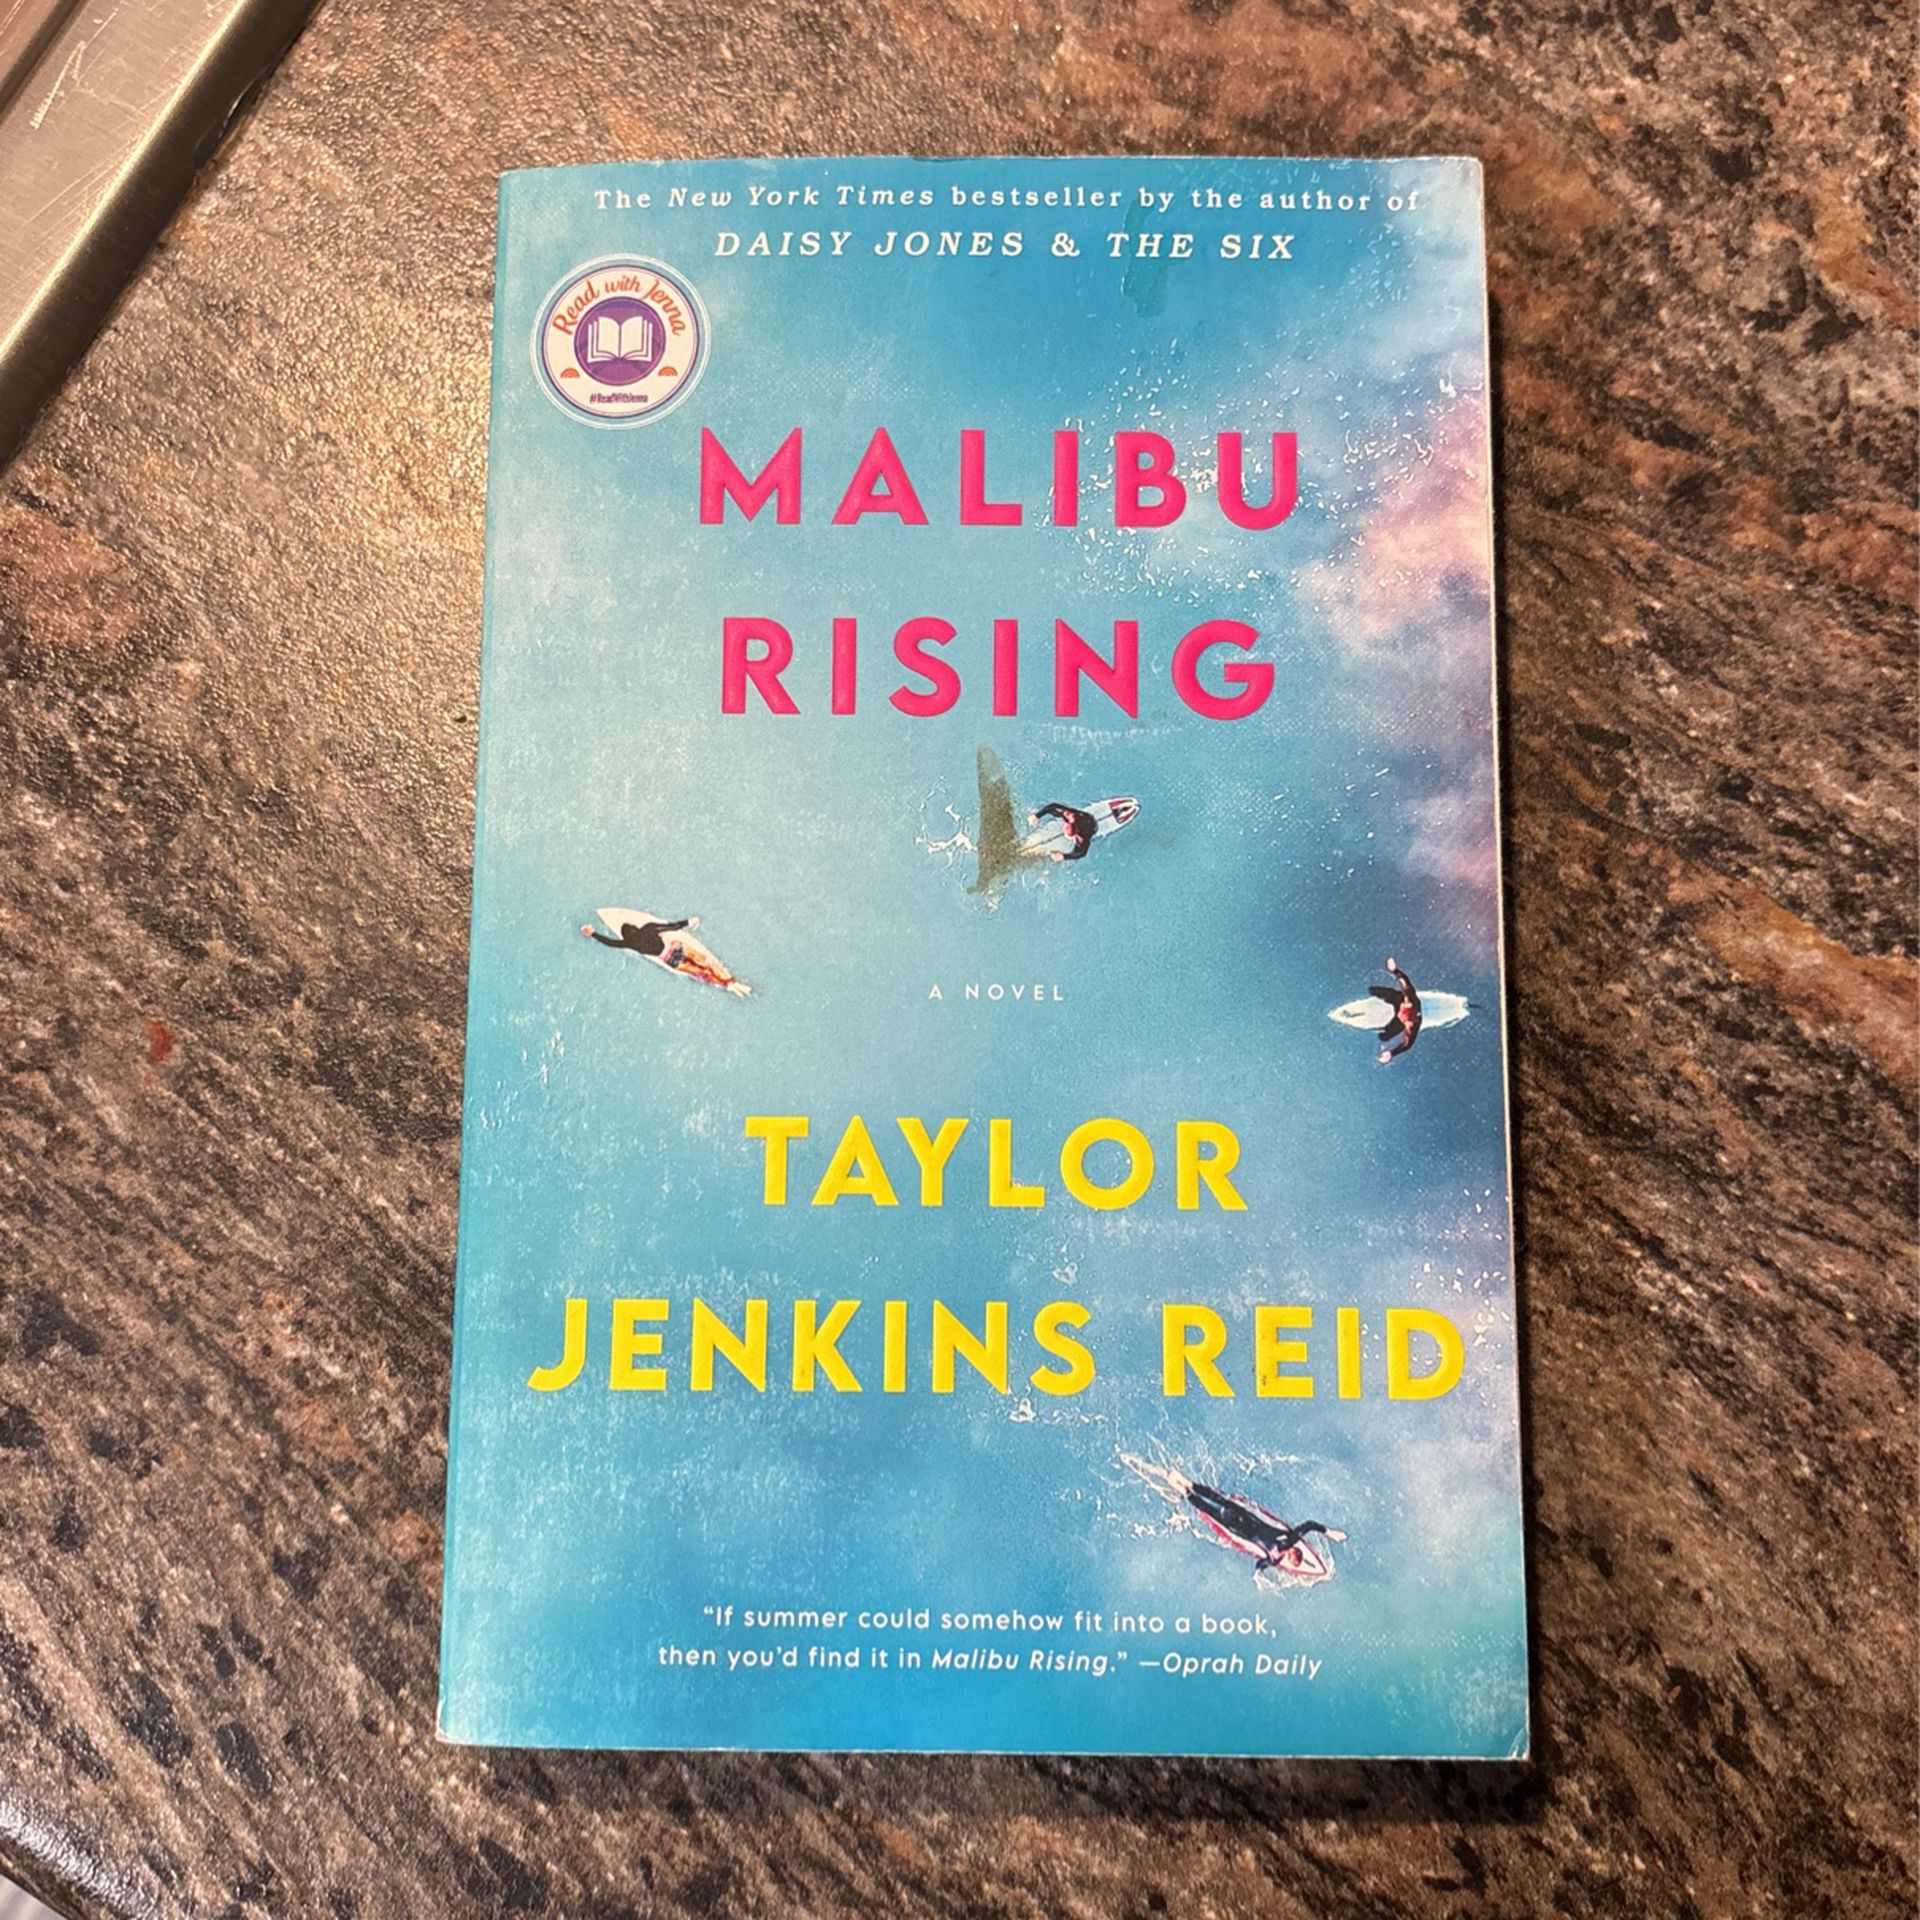 Malibu Rising By Taylor Jenkins Reid 